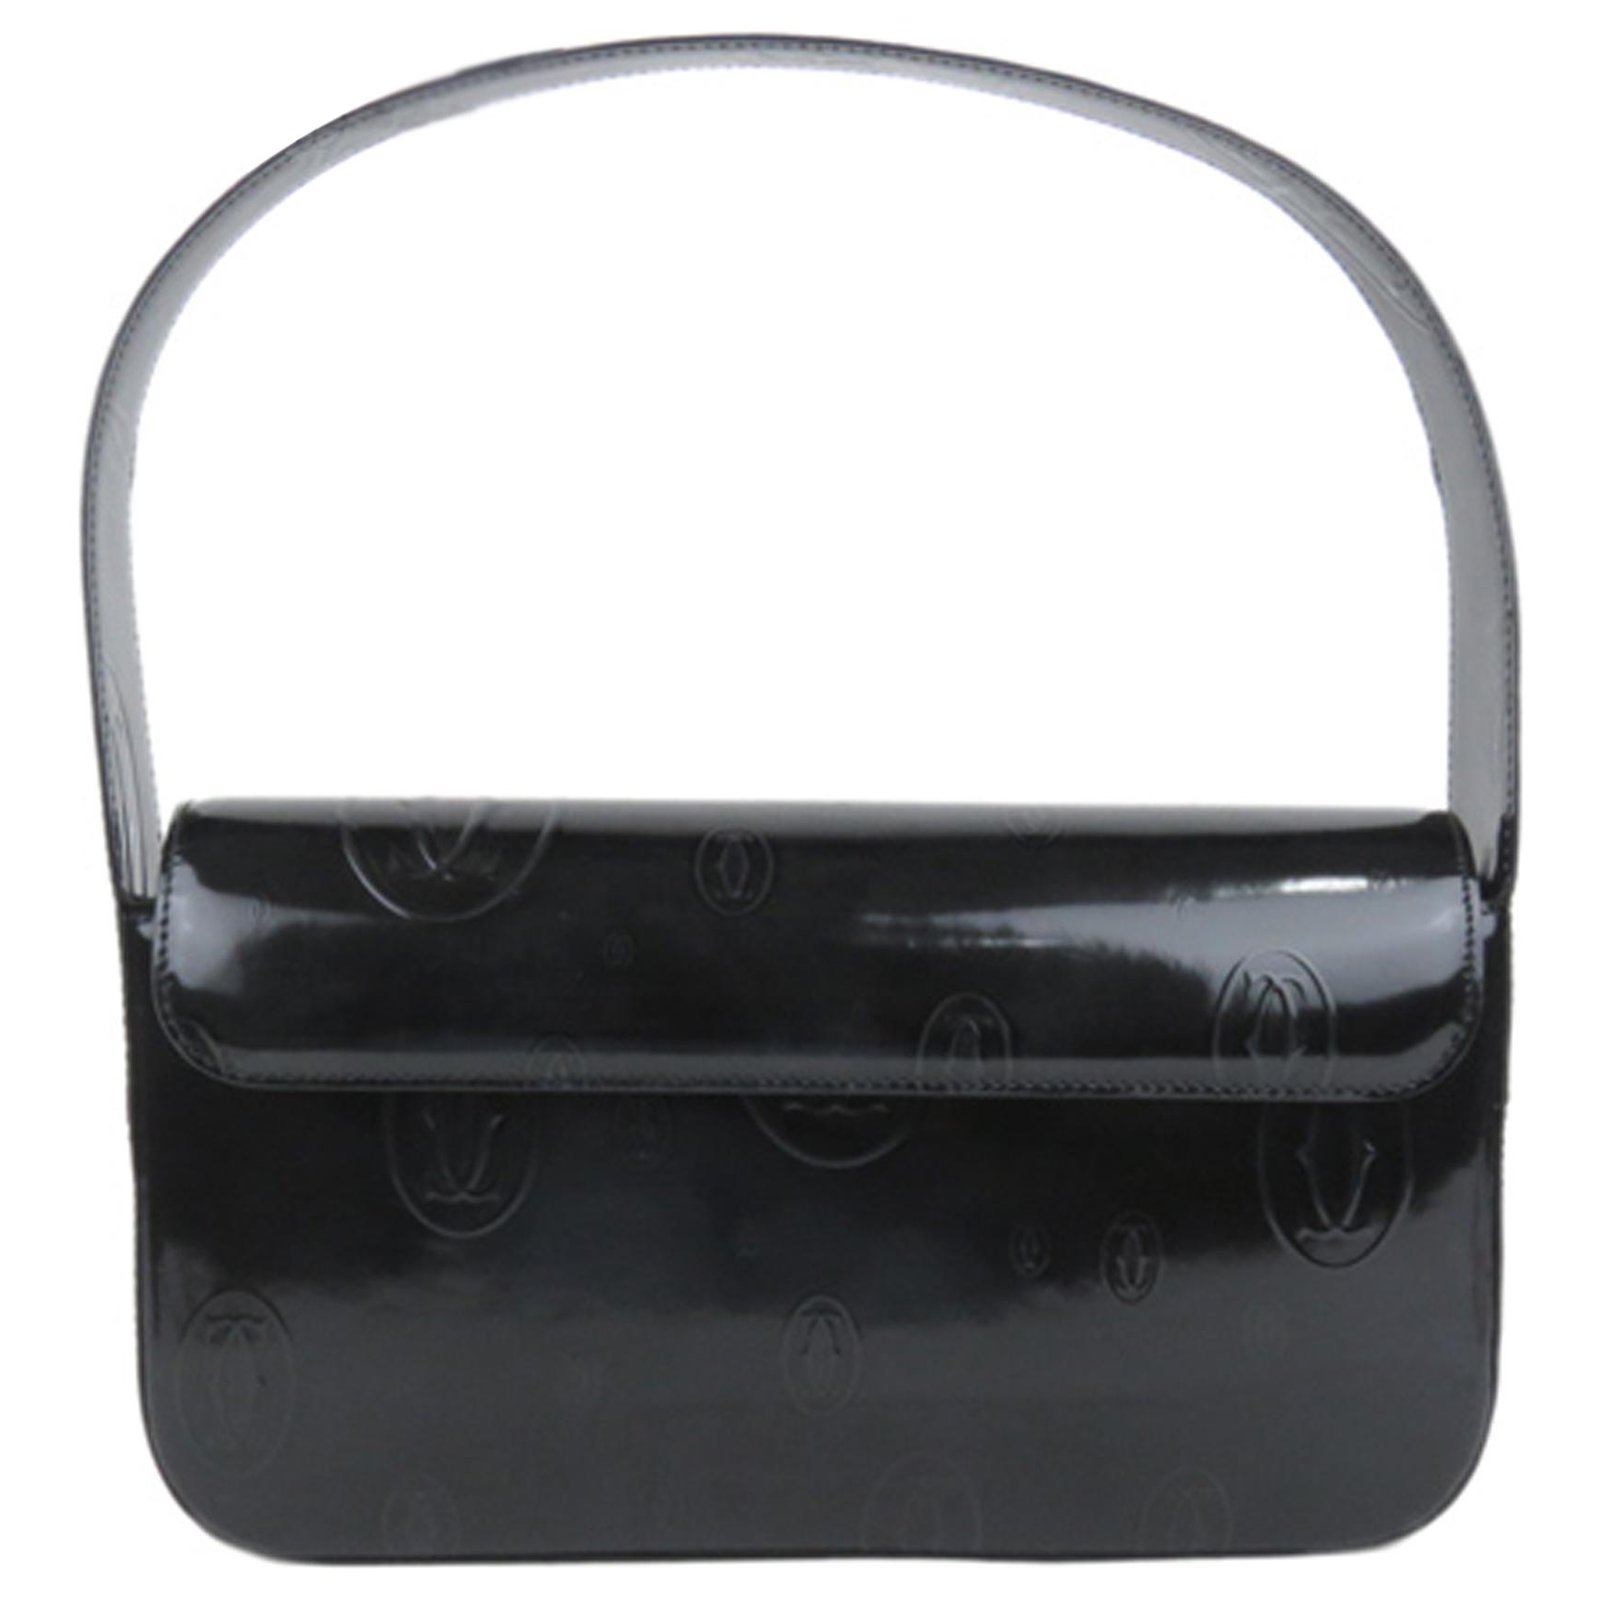 cartier patent leather handbag